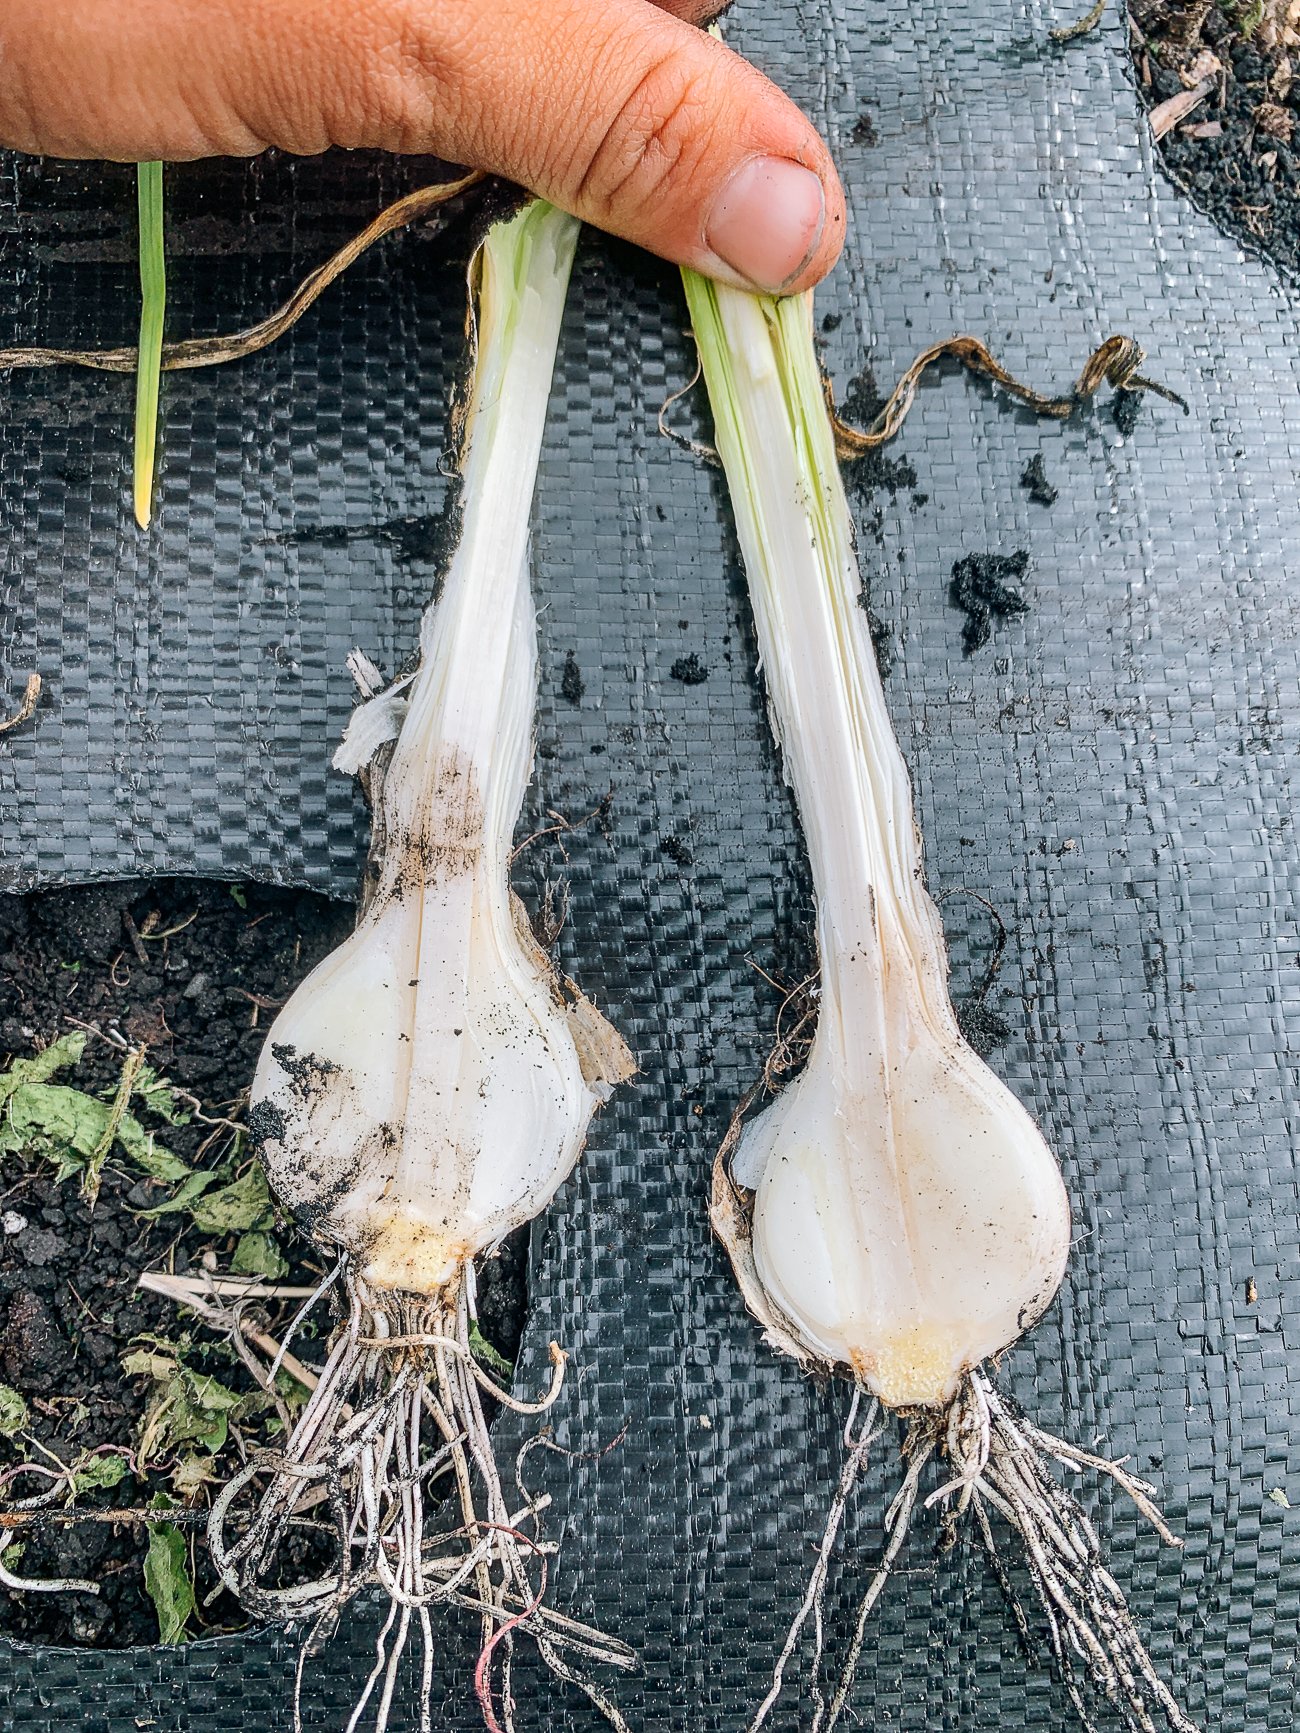 cross-section of fresh garlic